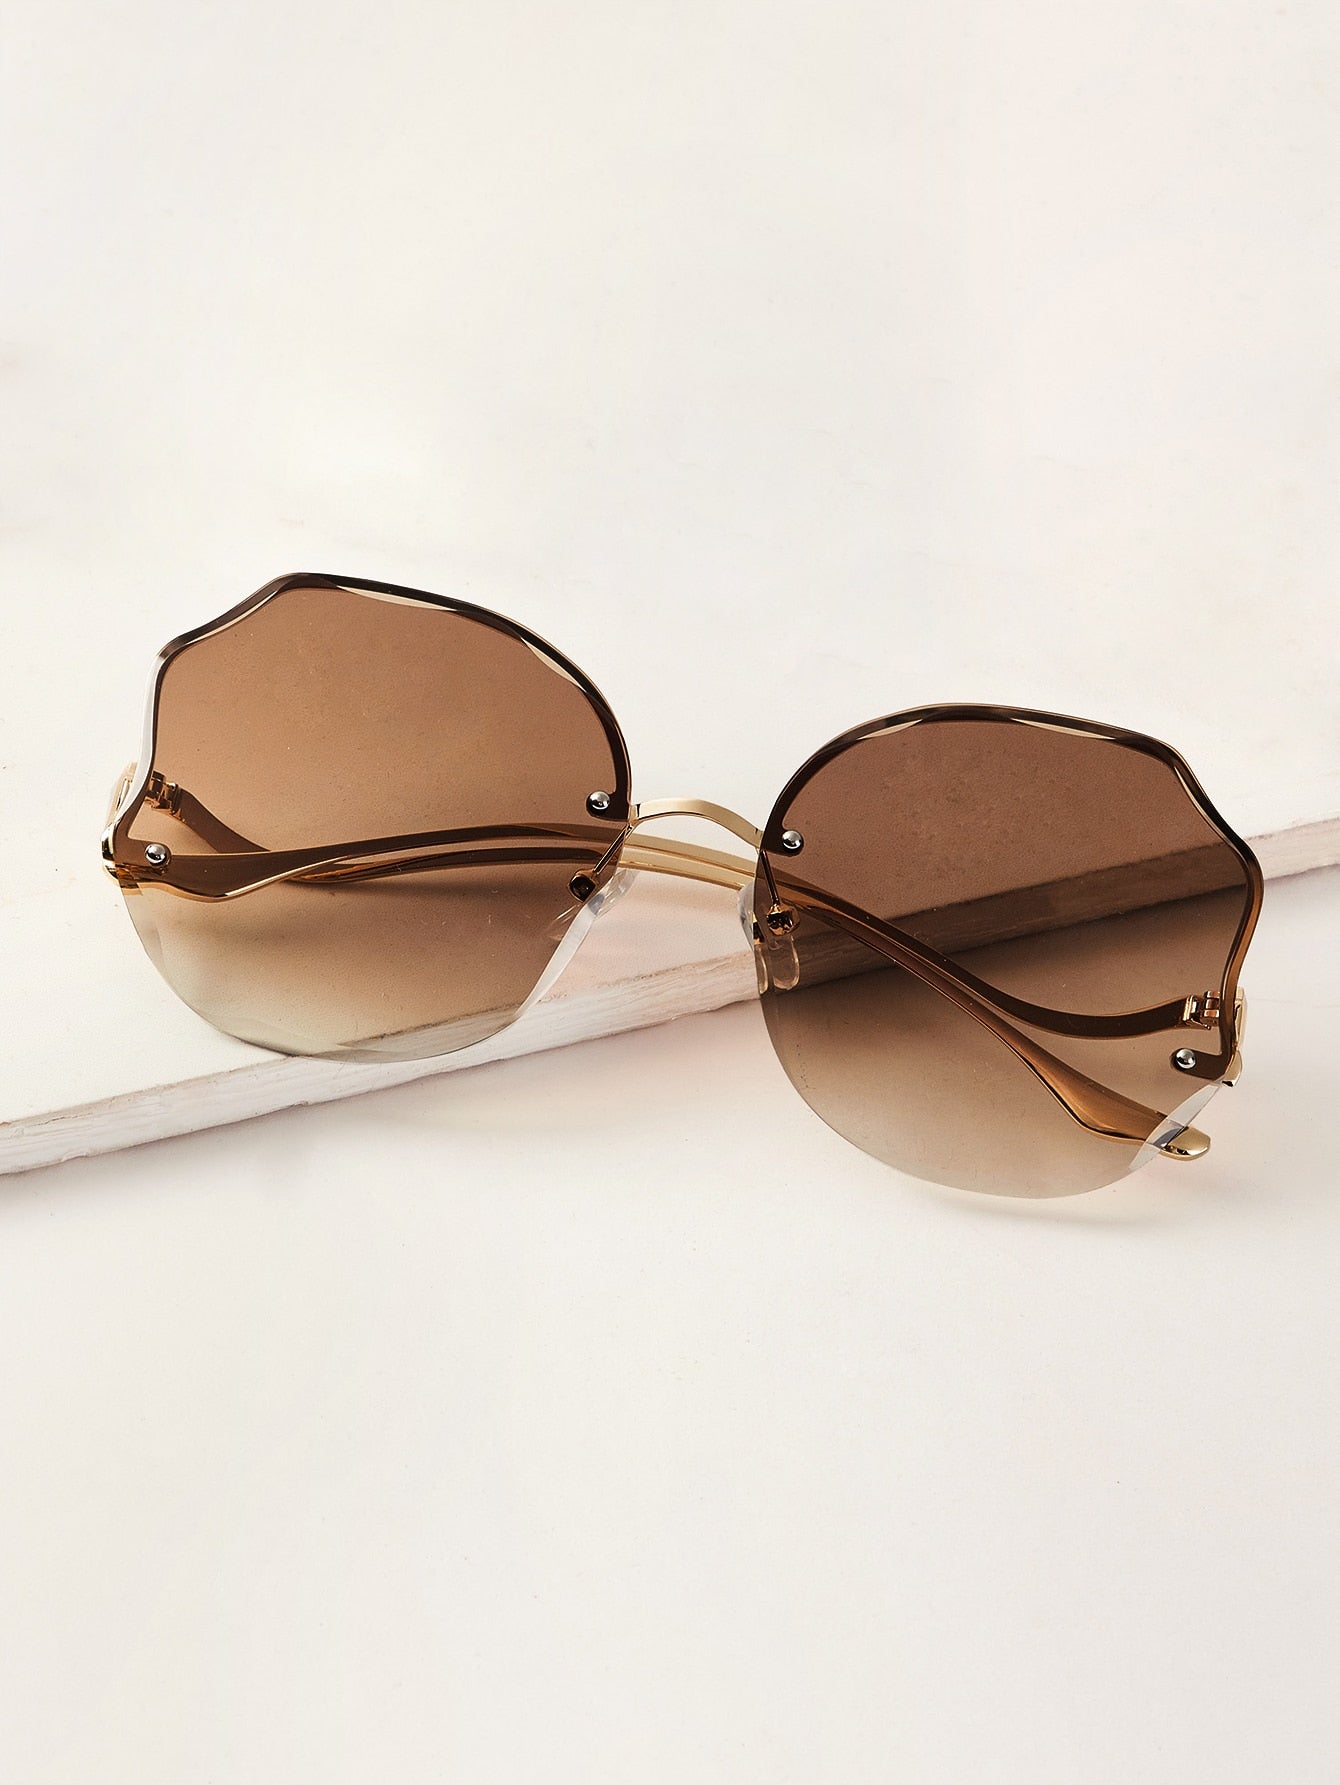 Simple Rimless Sunglasses - Brown